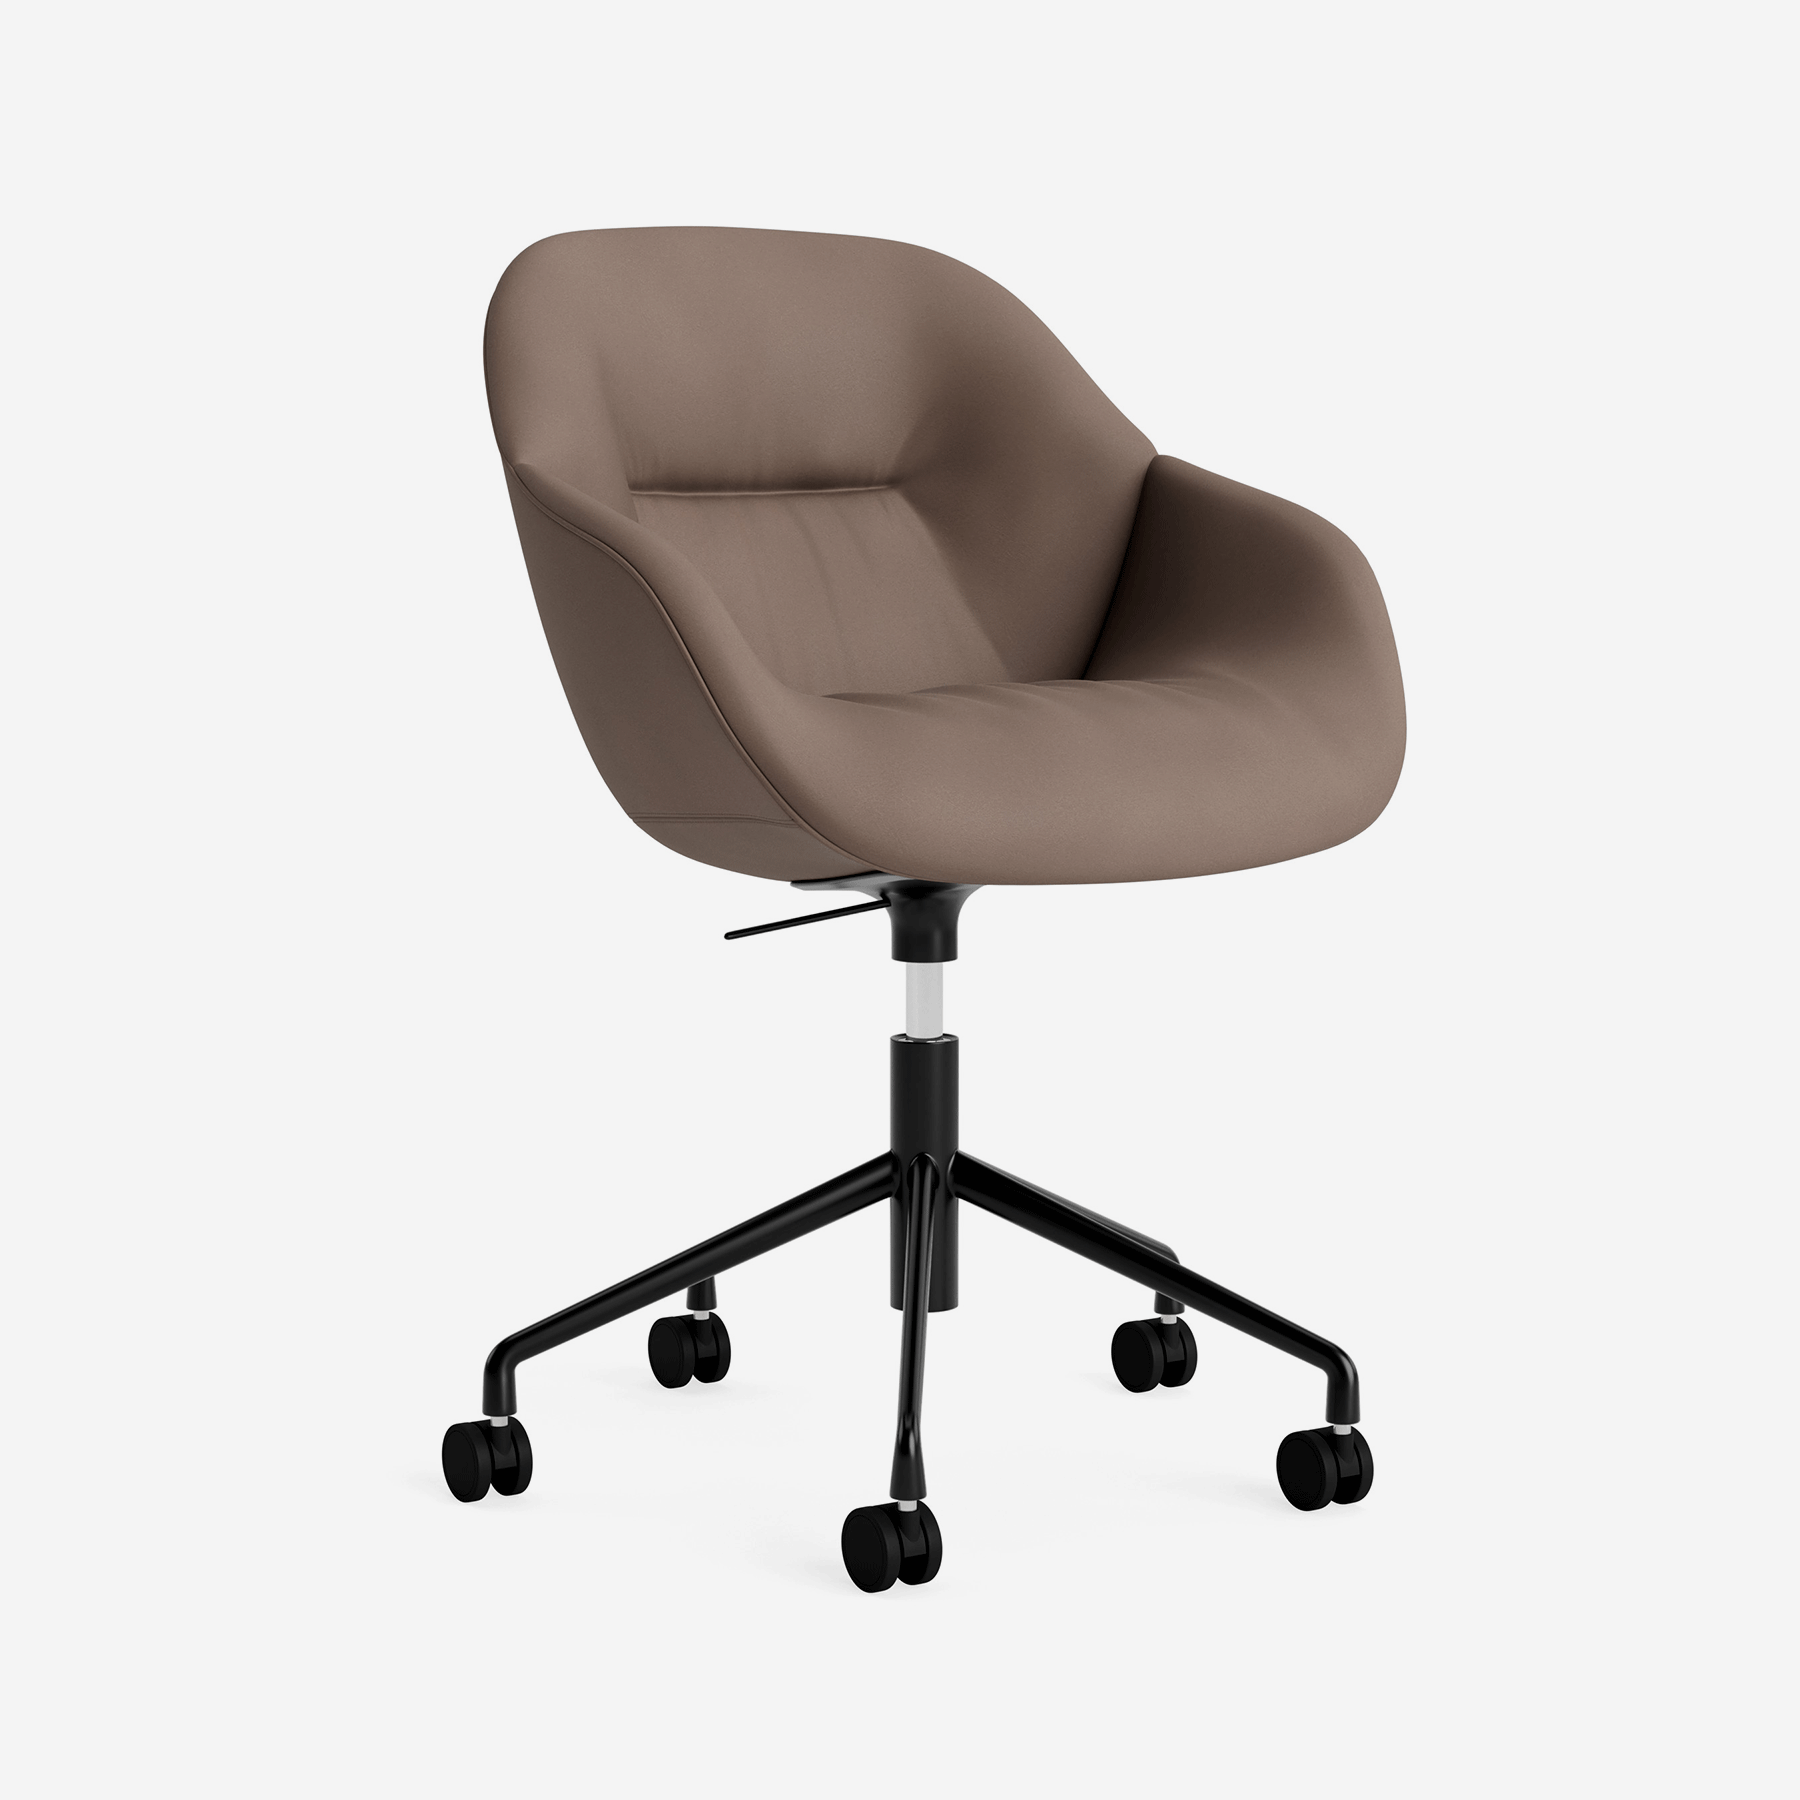 AAC 153 soft chair, swivel base